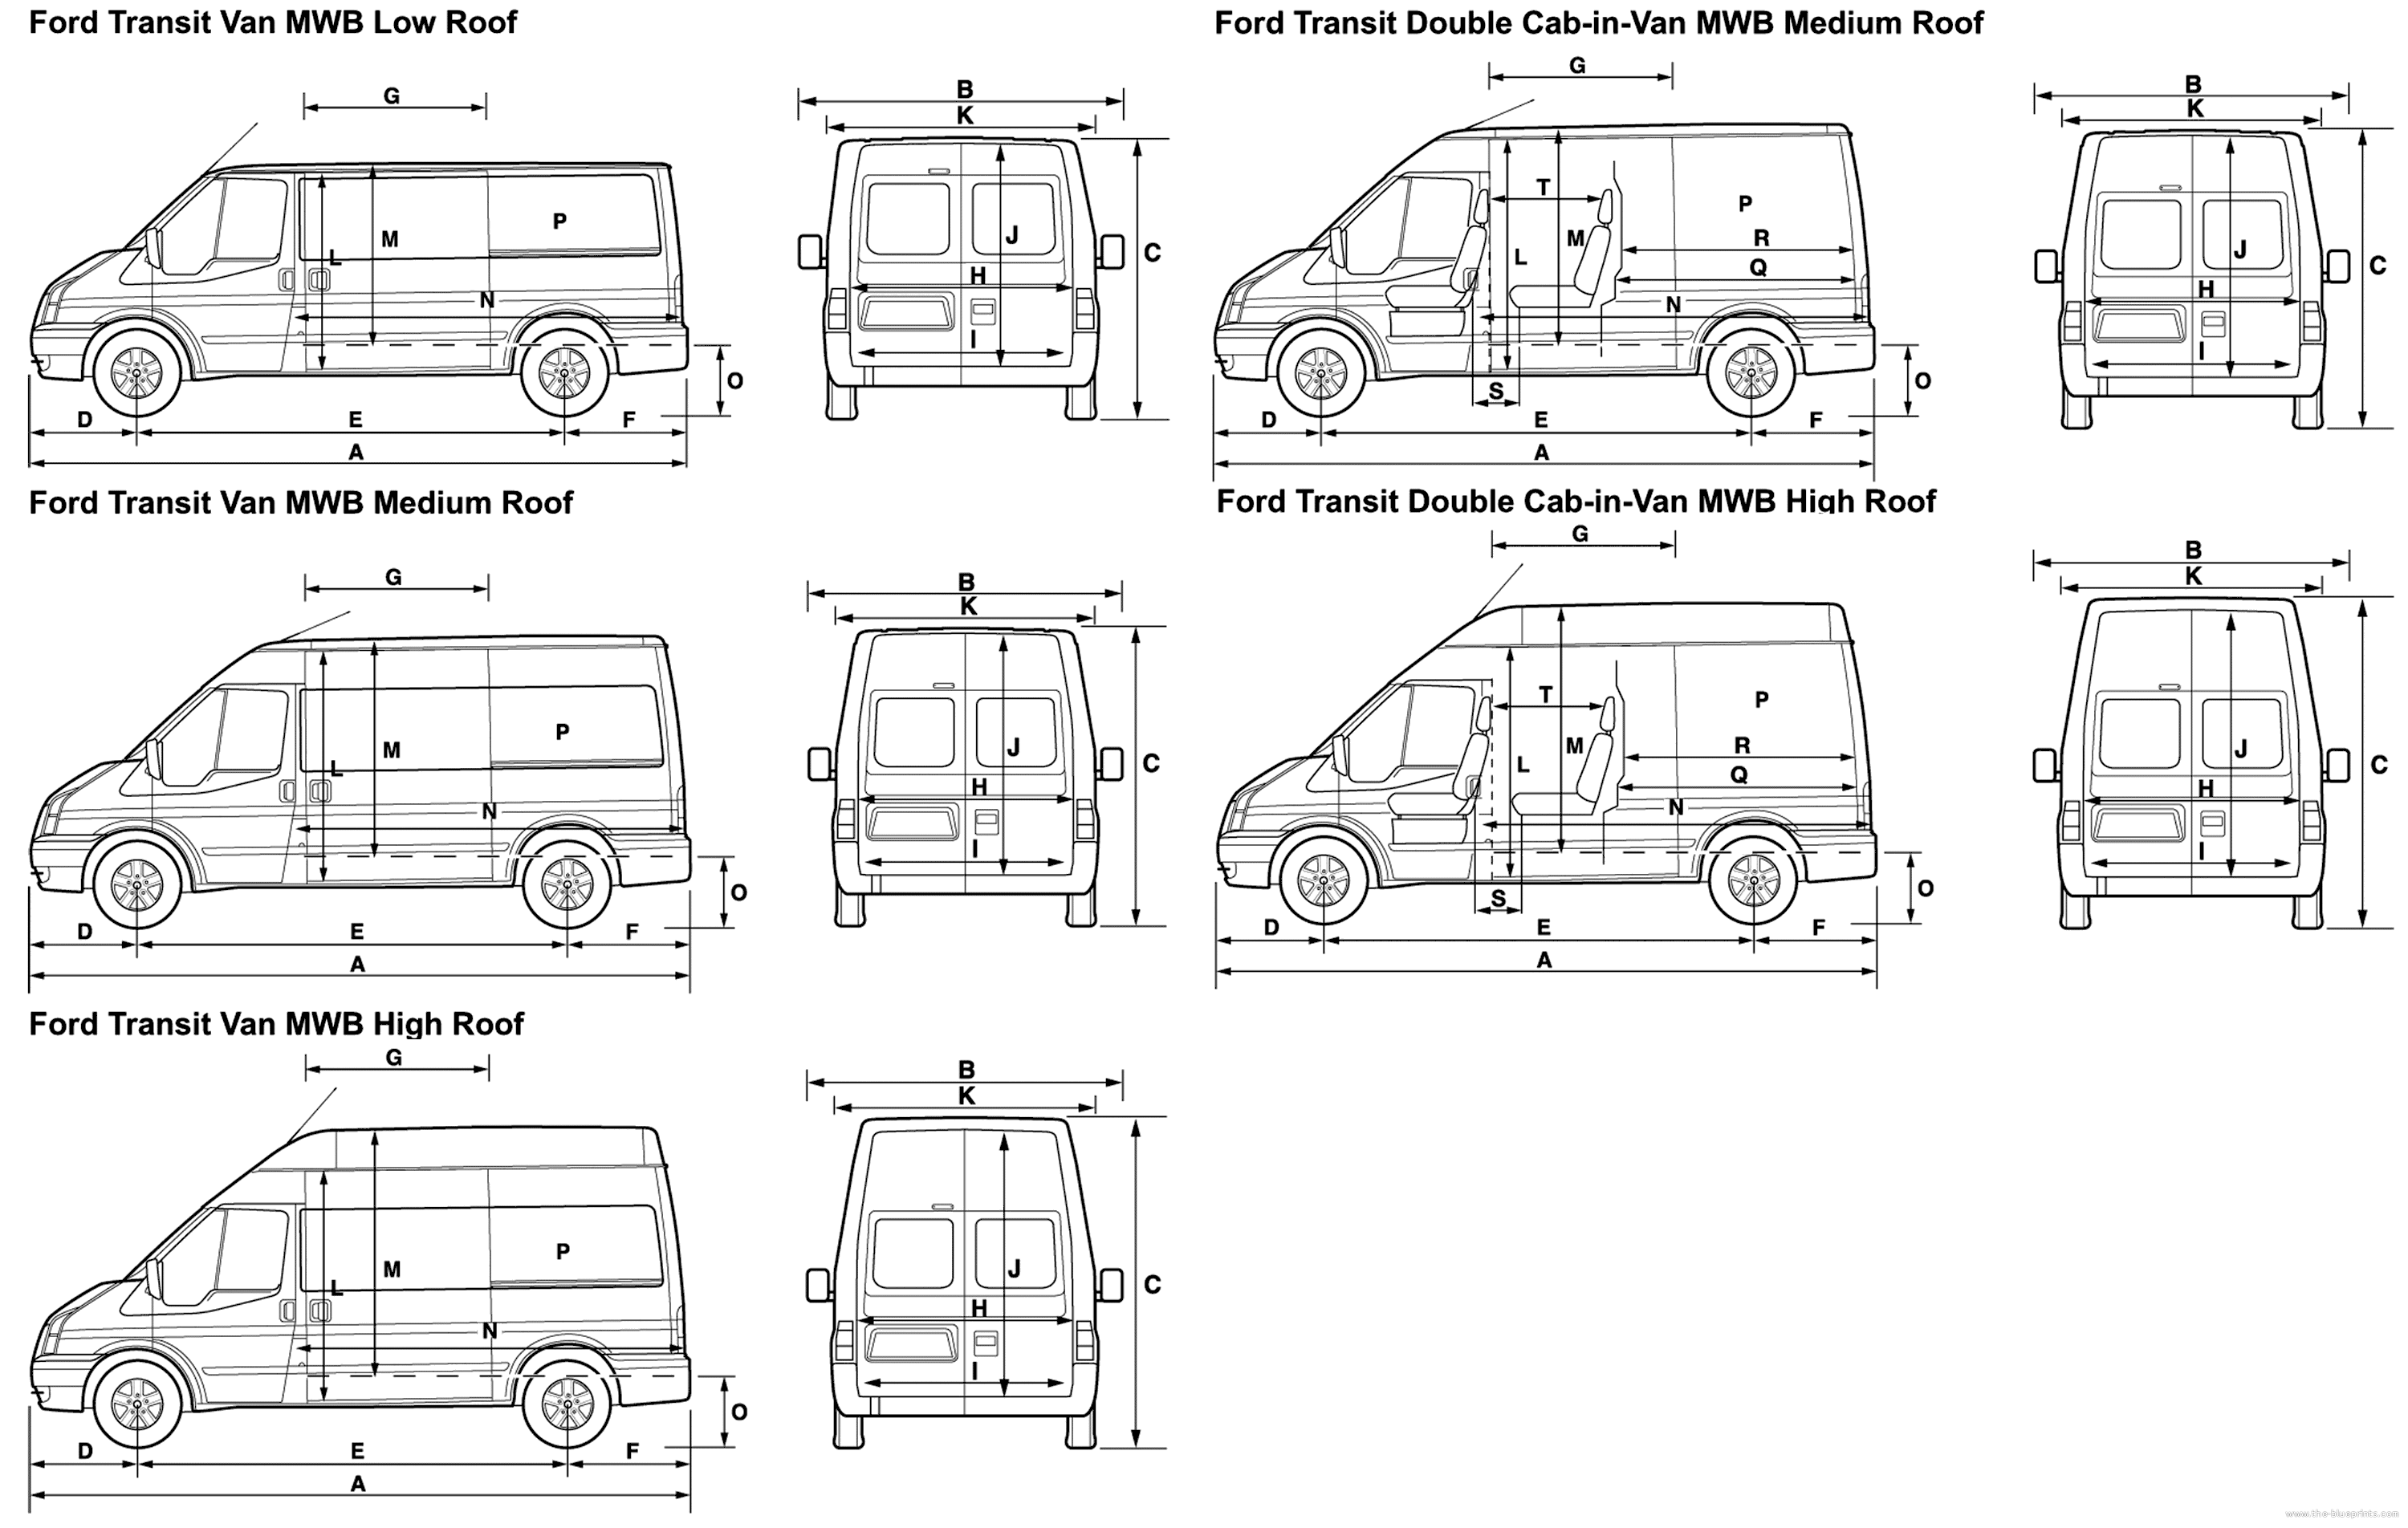 Ford transit swb internal dimensions #7